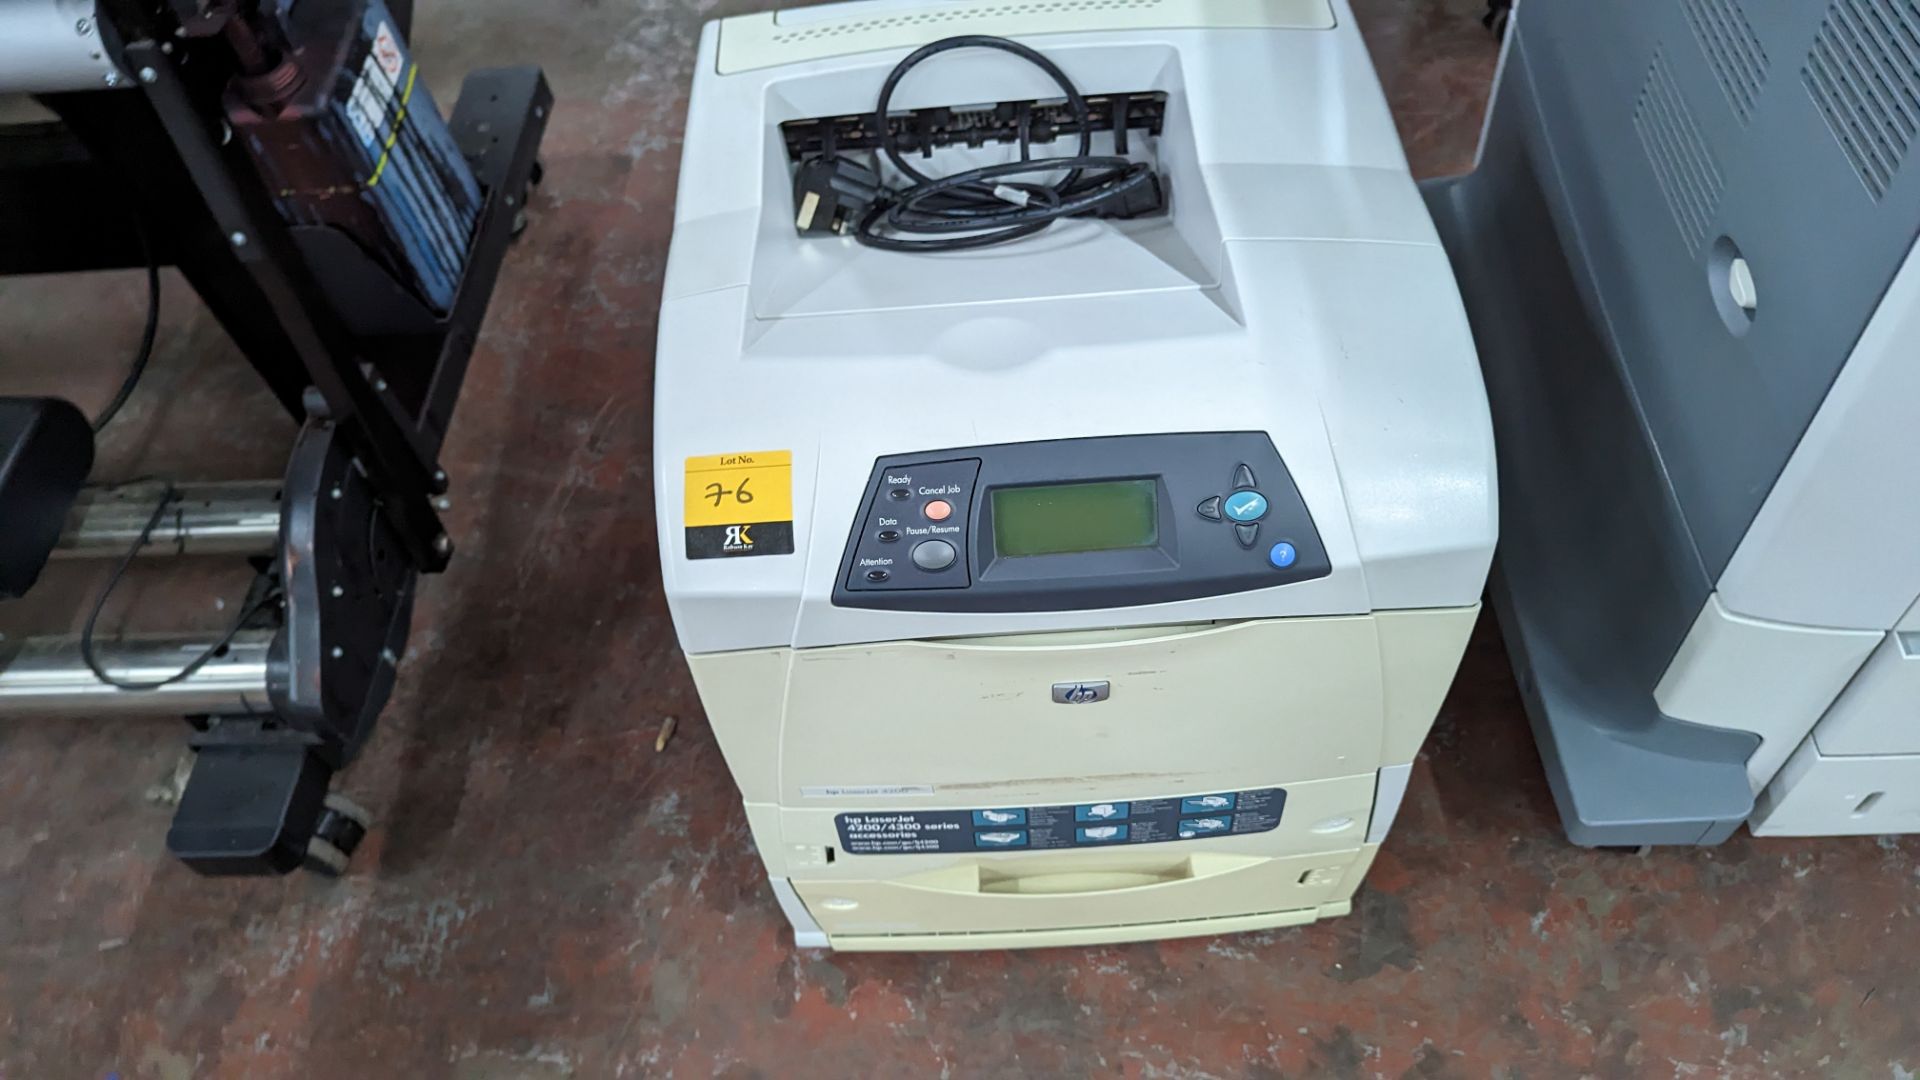 HP LaserJet 4200 printer incorporating deep paper cassette into base - Image 8 of 11